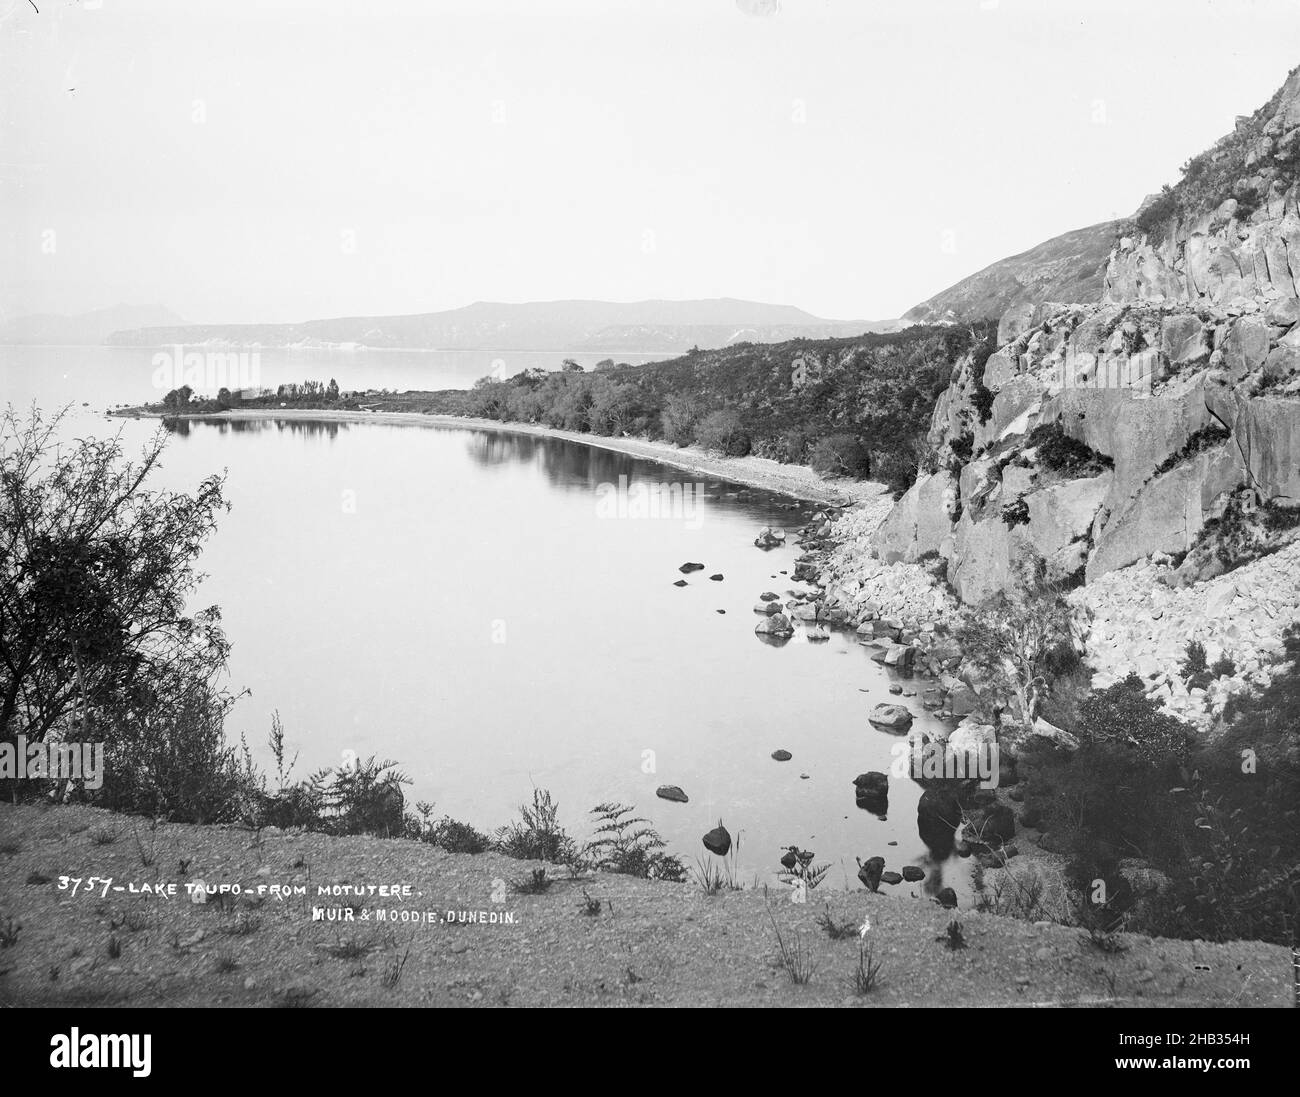 Lake Taupo, from Motutere, Burton Brothers studio, photography studio, 1885, New Zealand, black-and-white photography Stock Photo